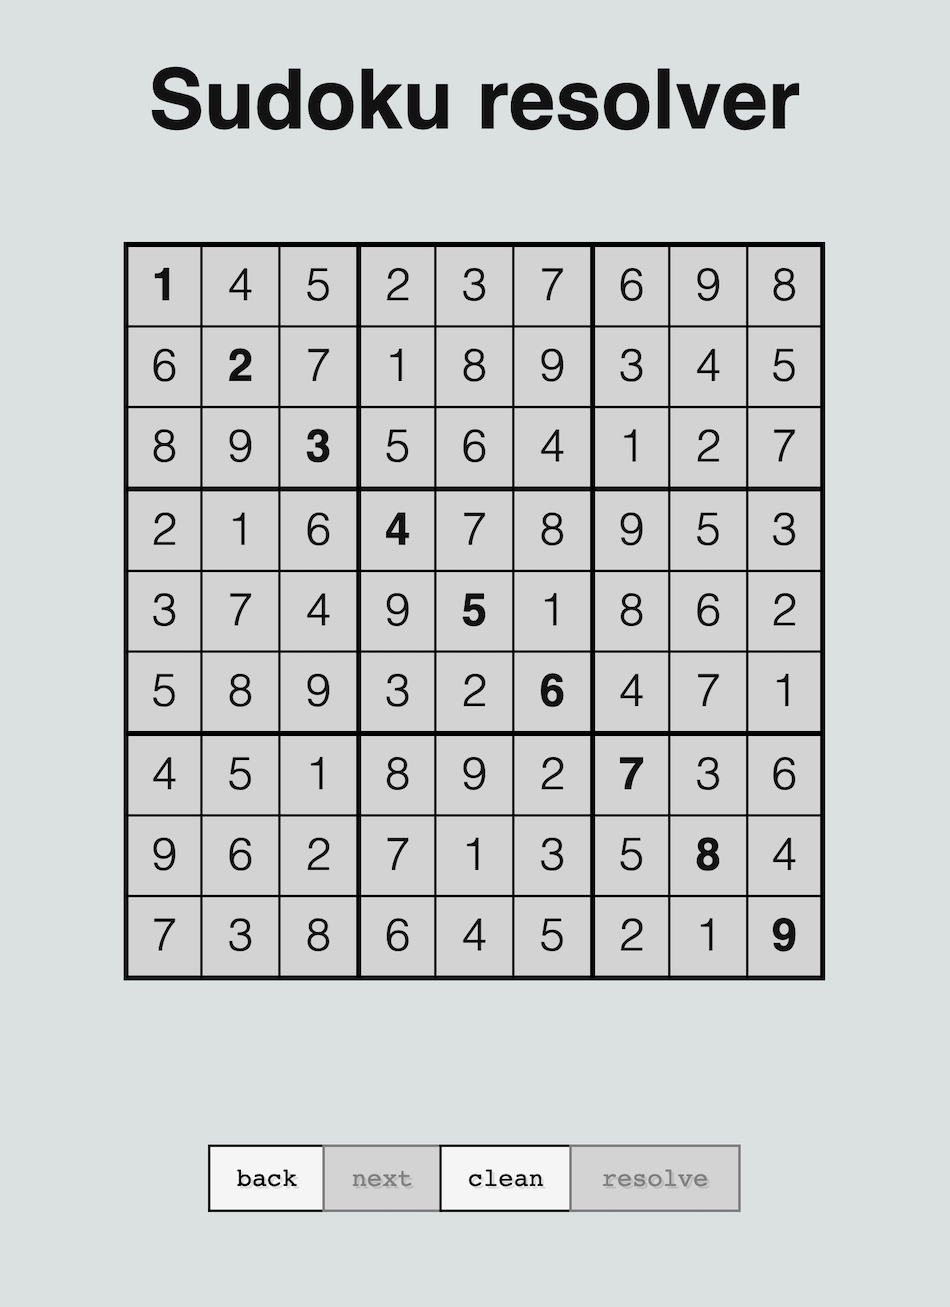 Sudoku screenshot.